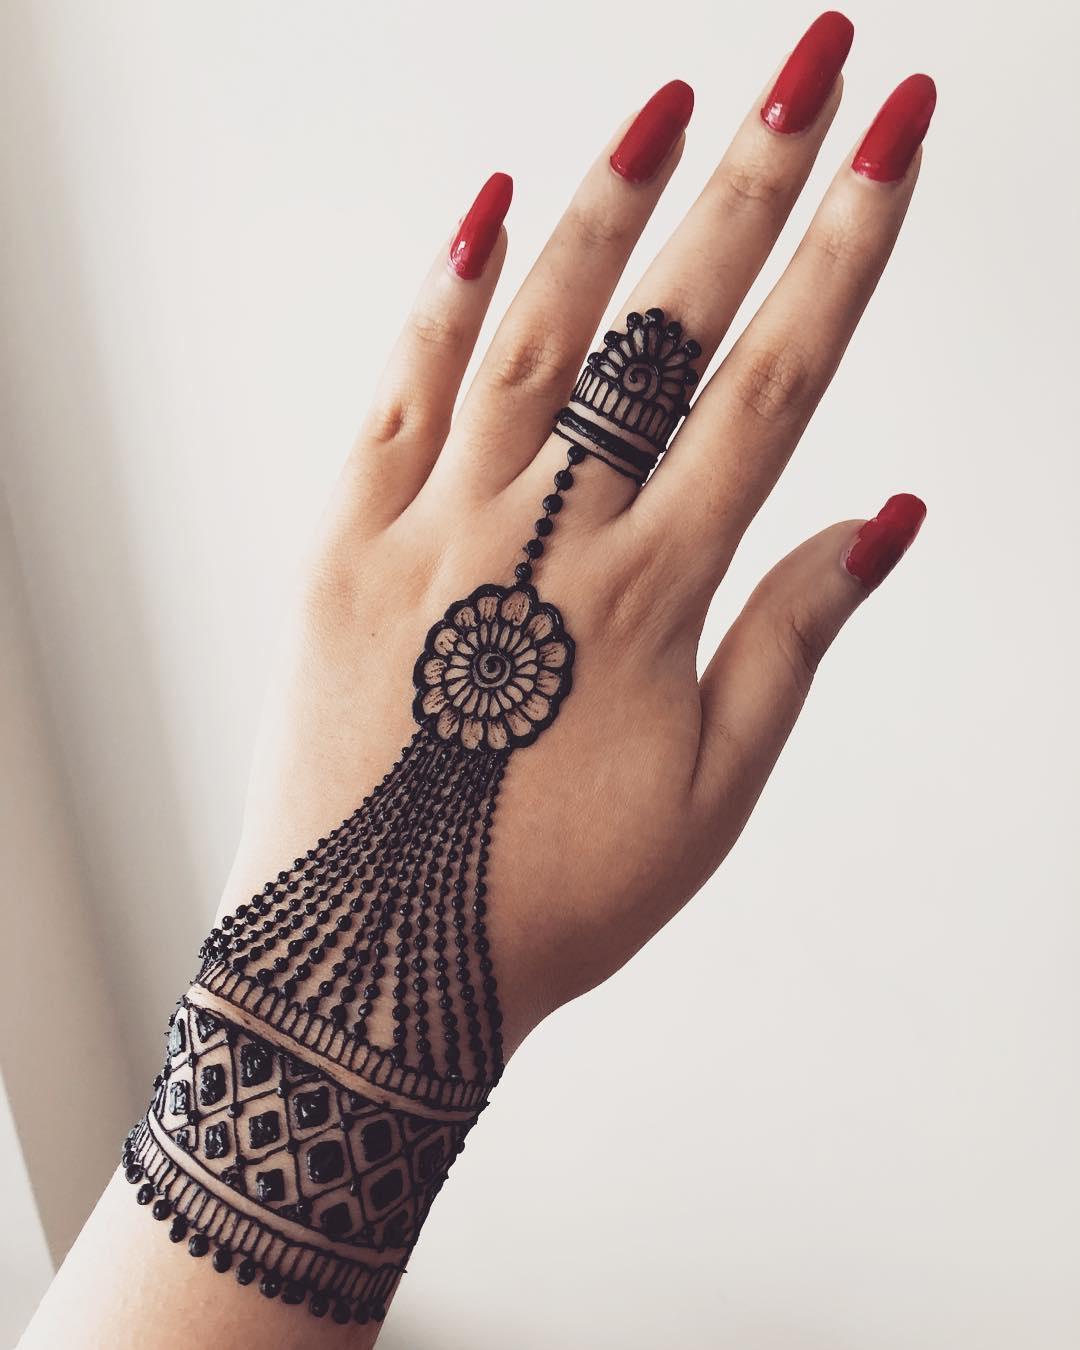 Simple Arabic Mehndi Designs for Left Hand - K4 Fashion